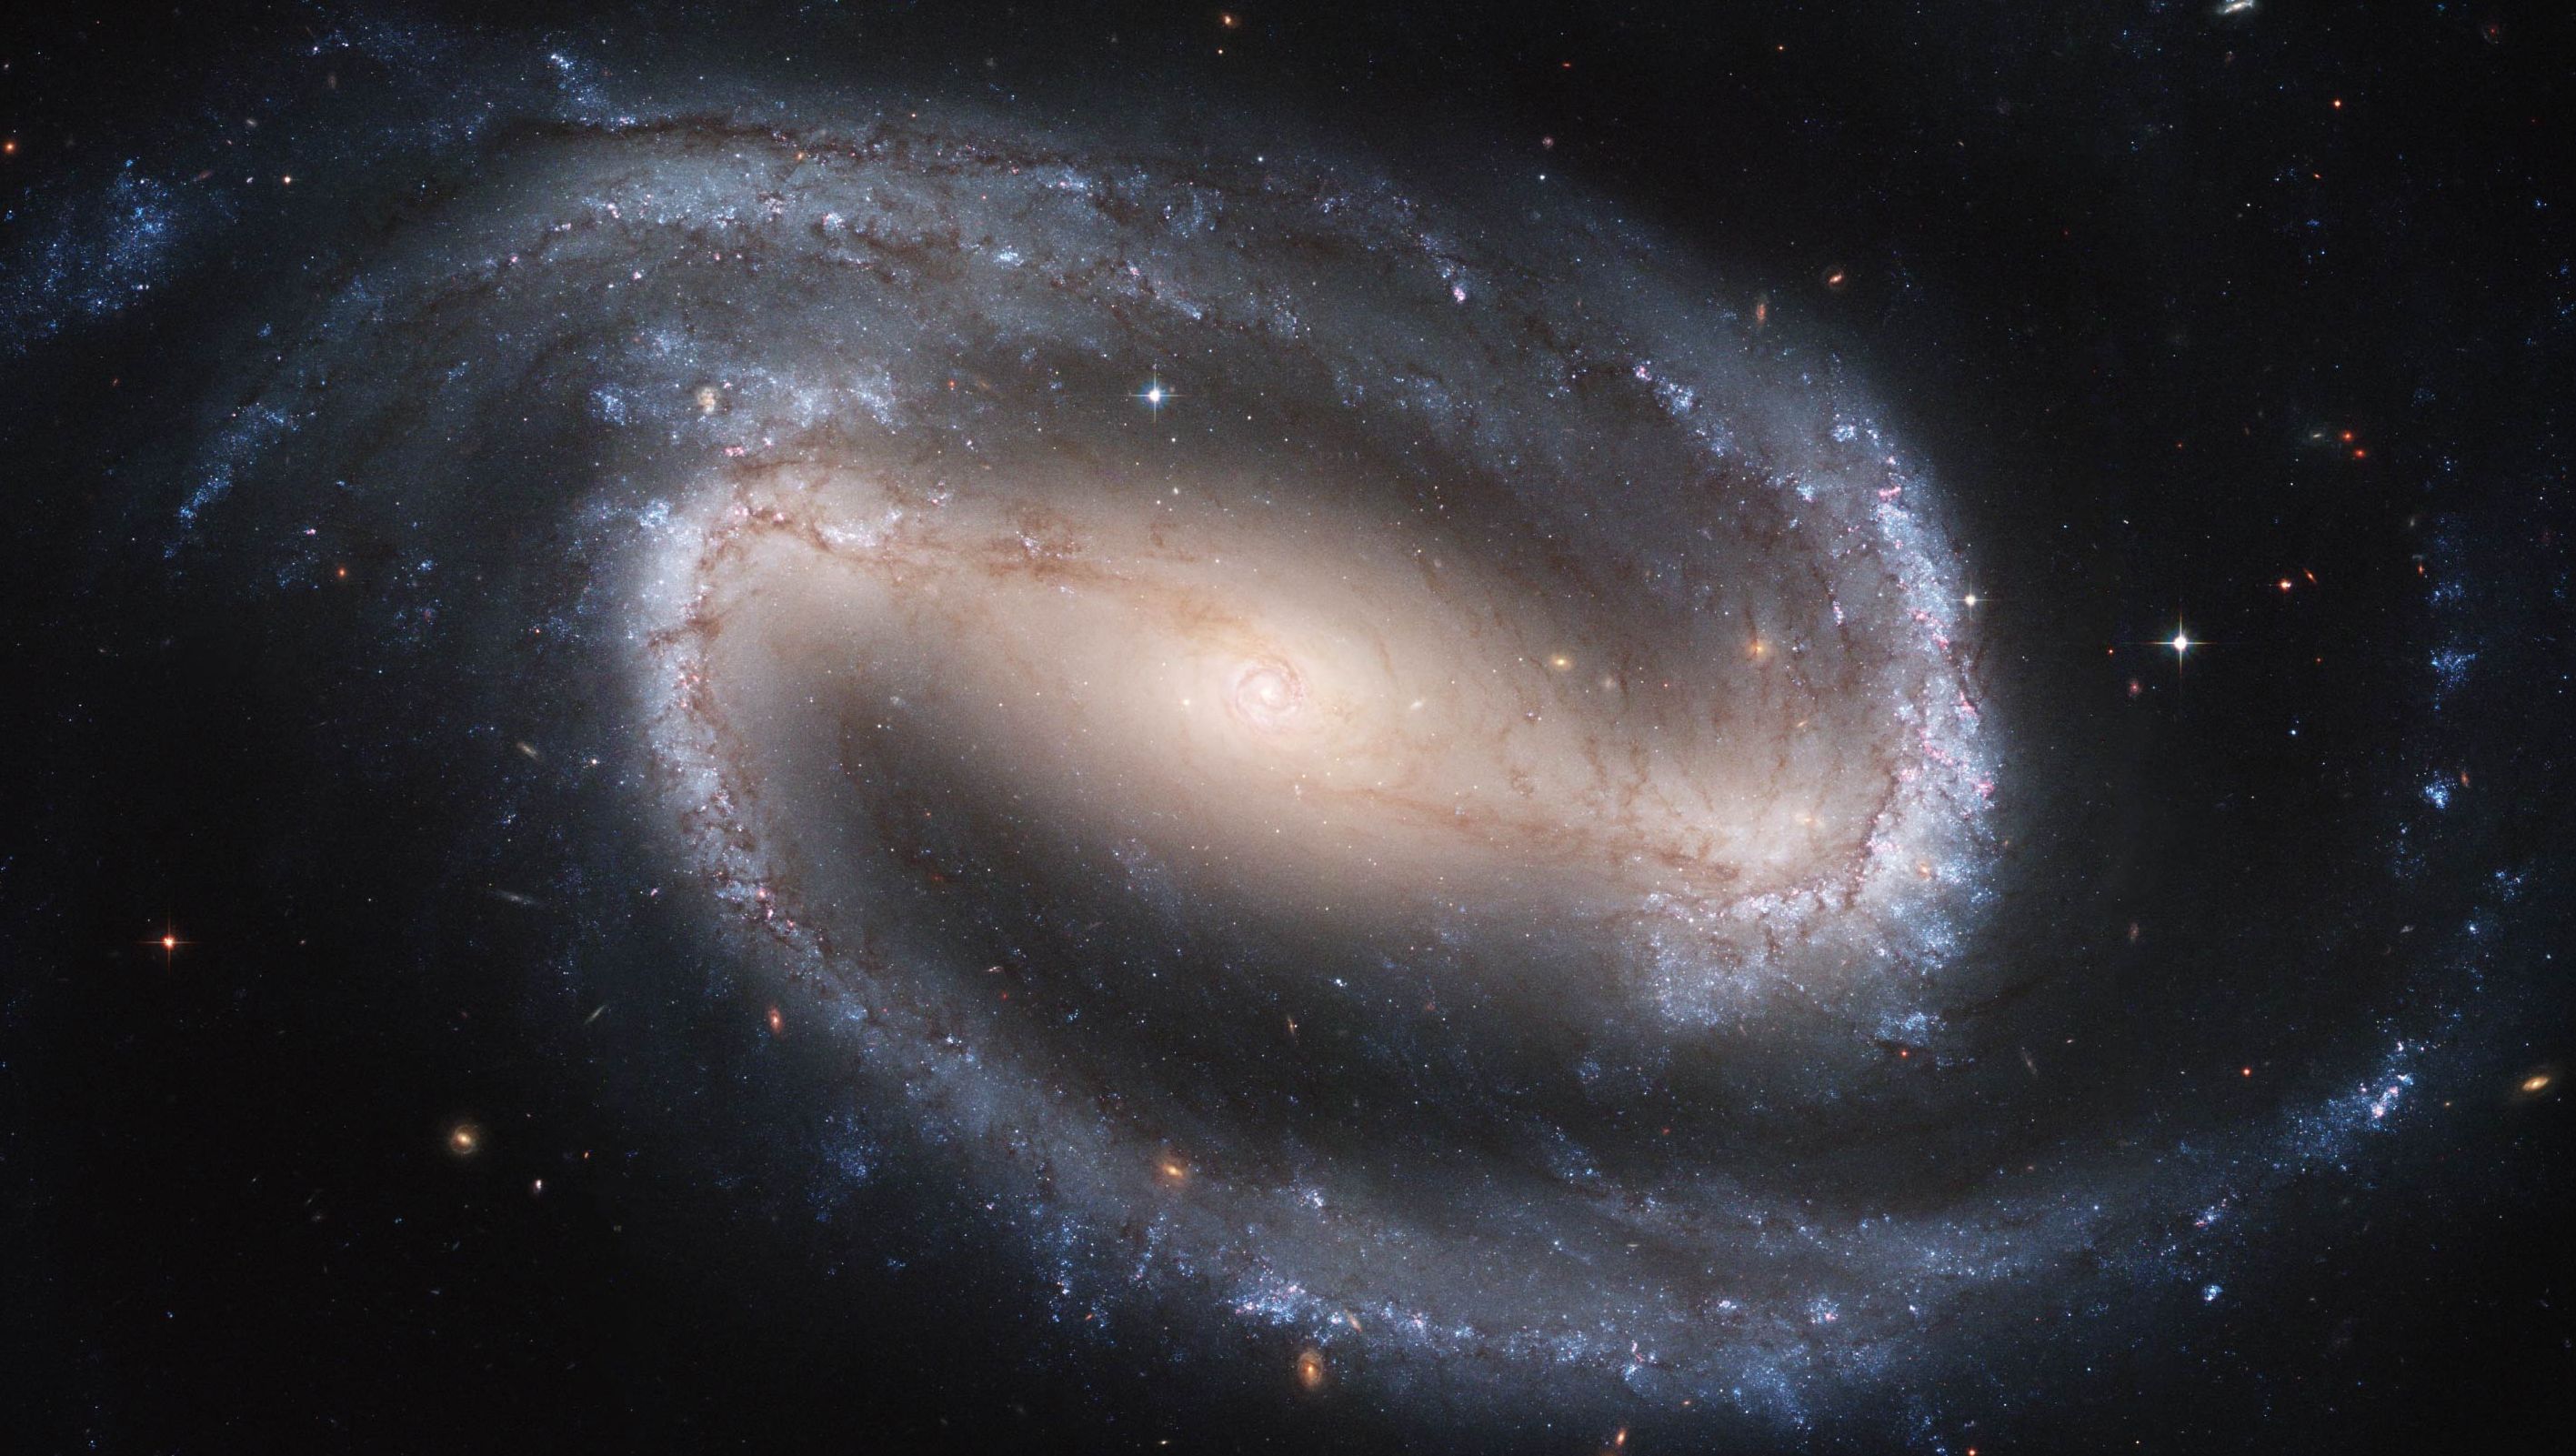 Spiral'naya galaktika NGC 1300 s peremychkoi